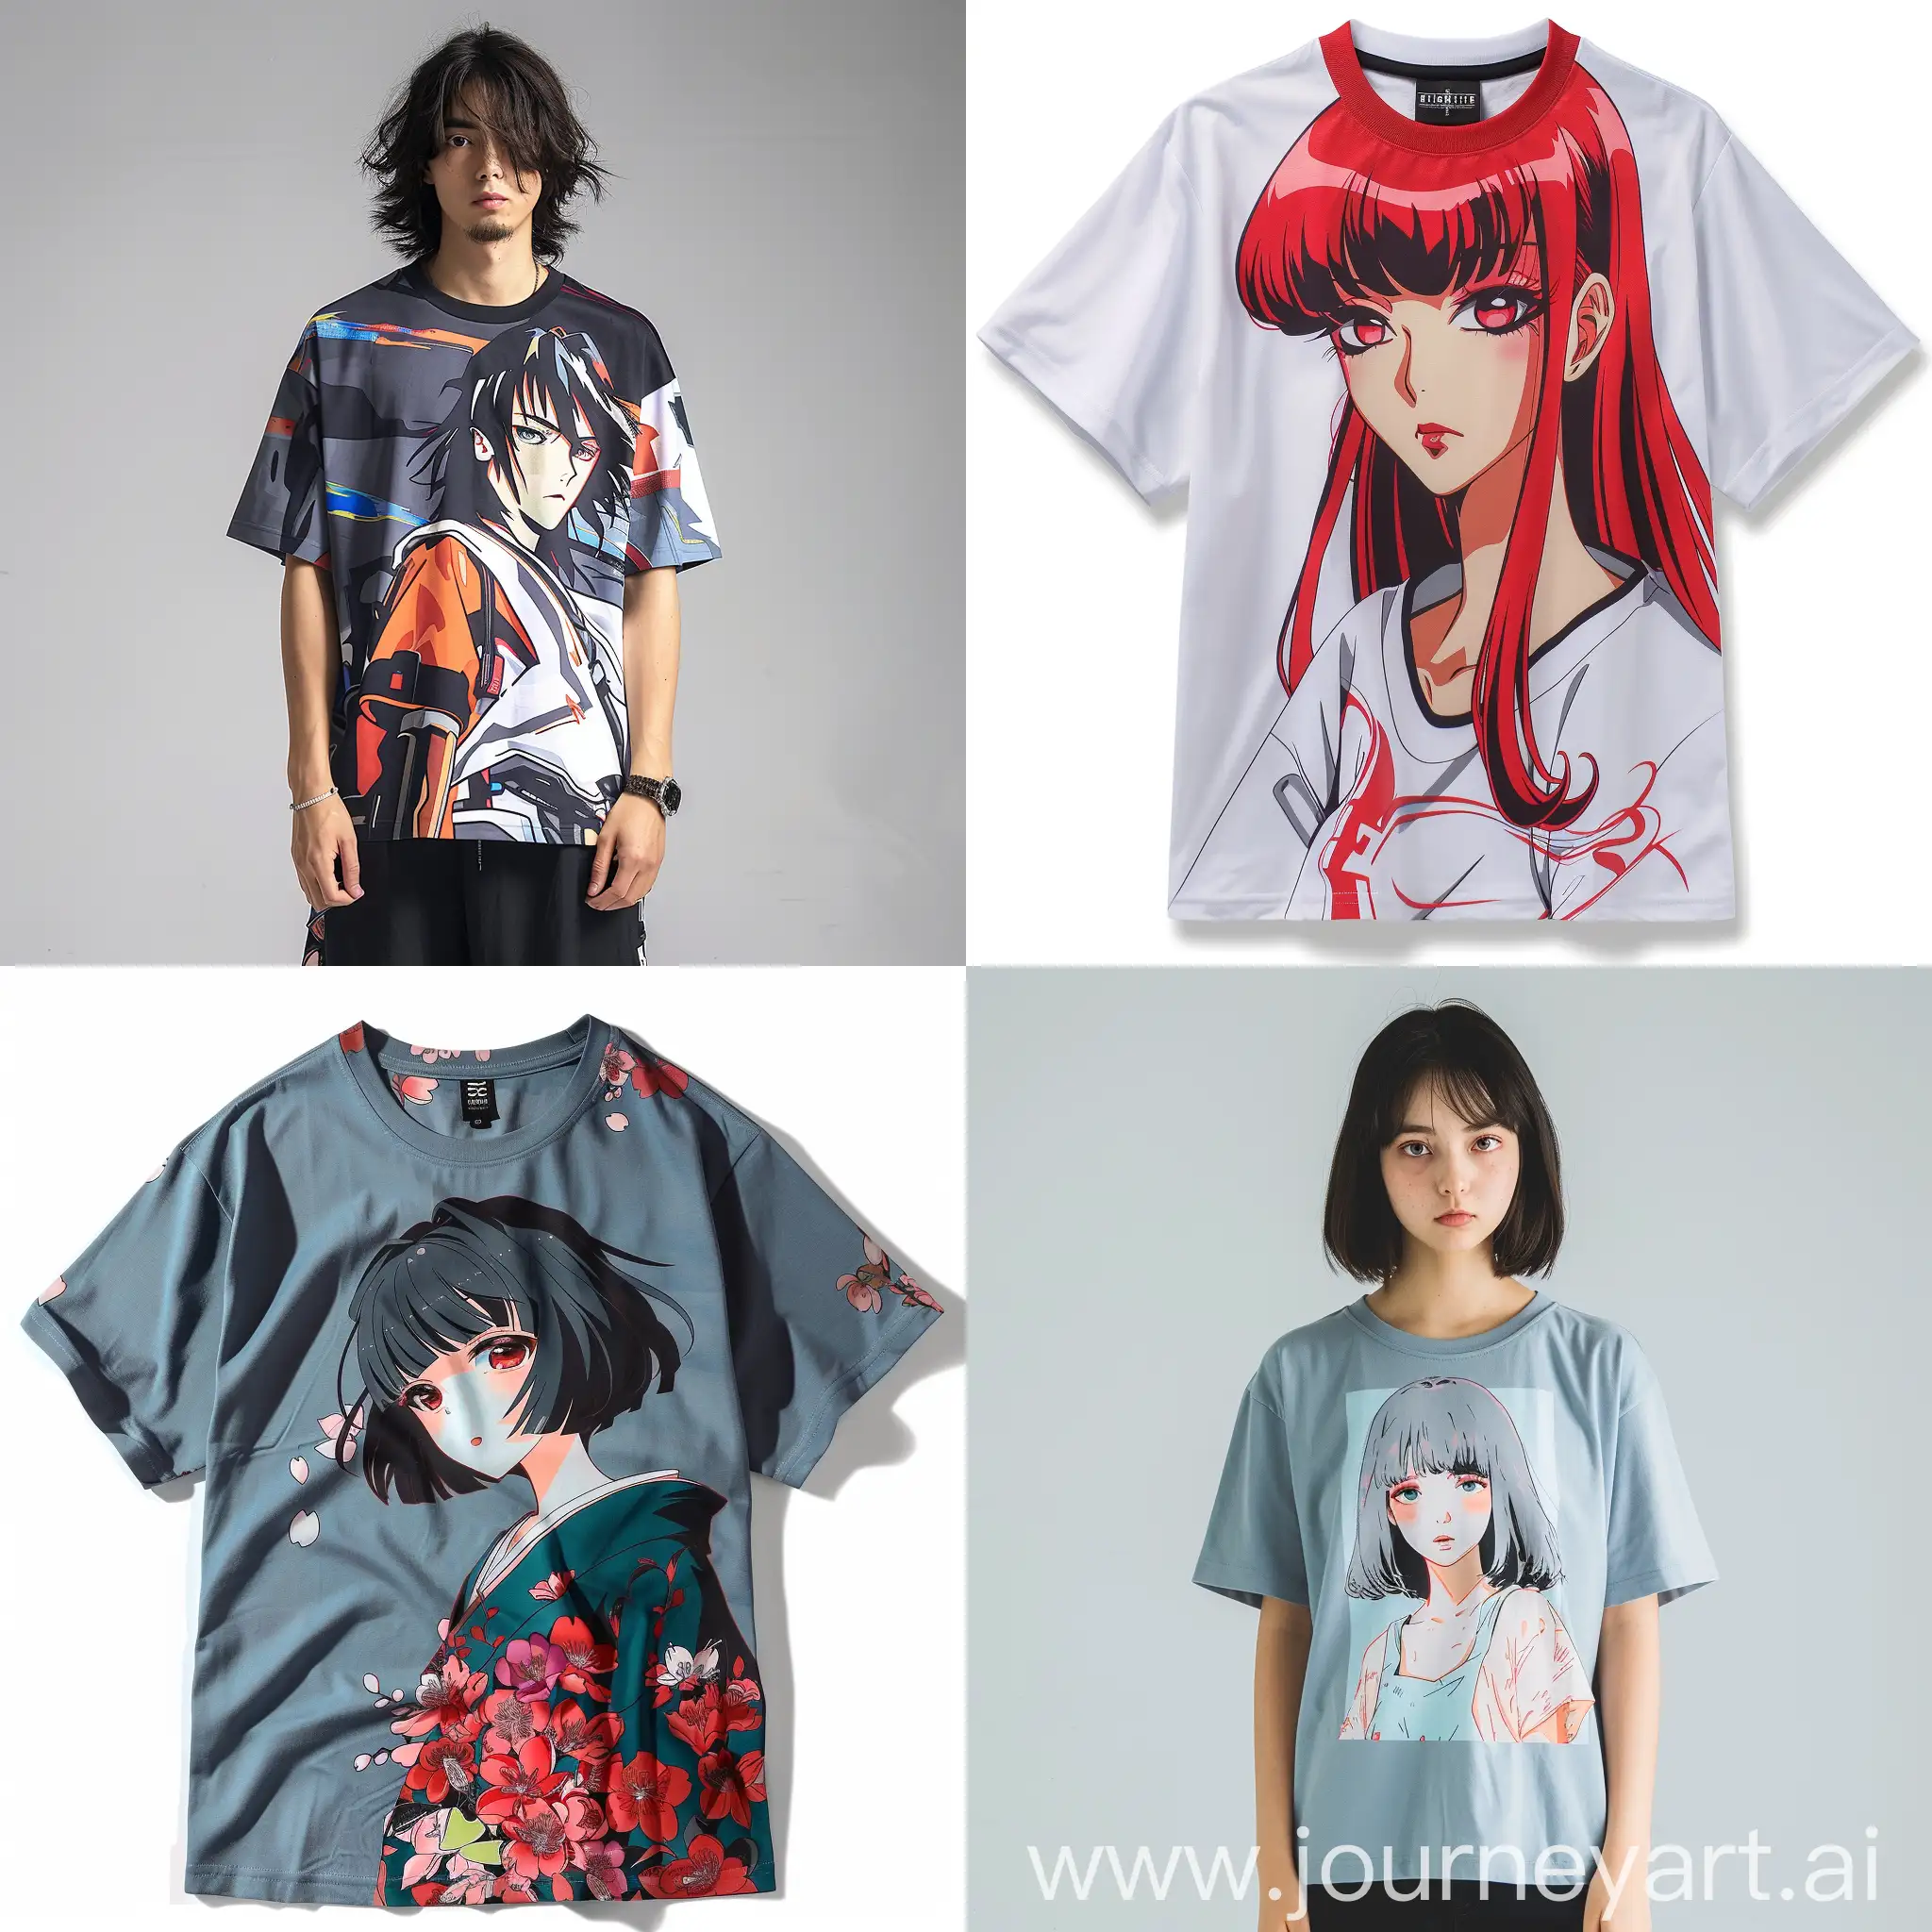 Minimal-Anime-Print-TShirt-for-Stylish-Casual-Wear